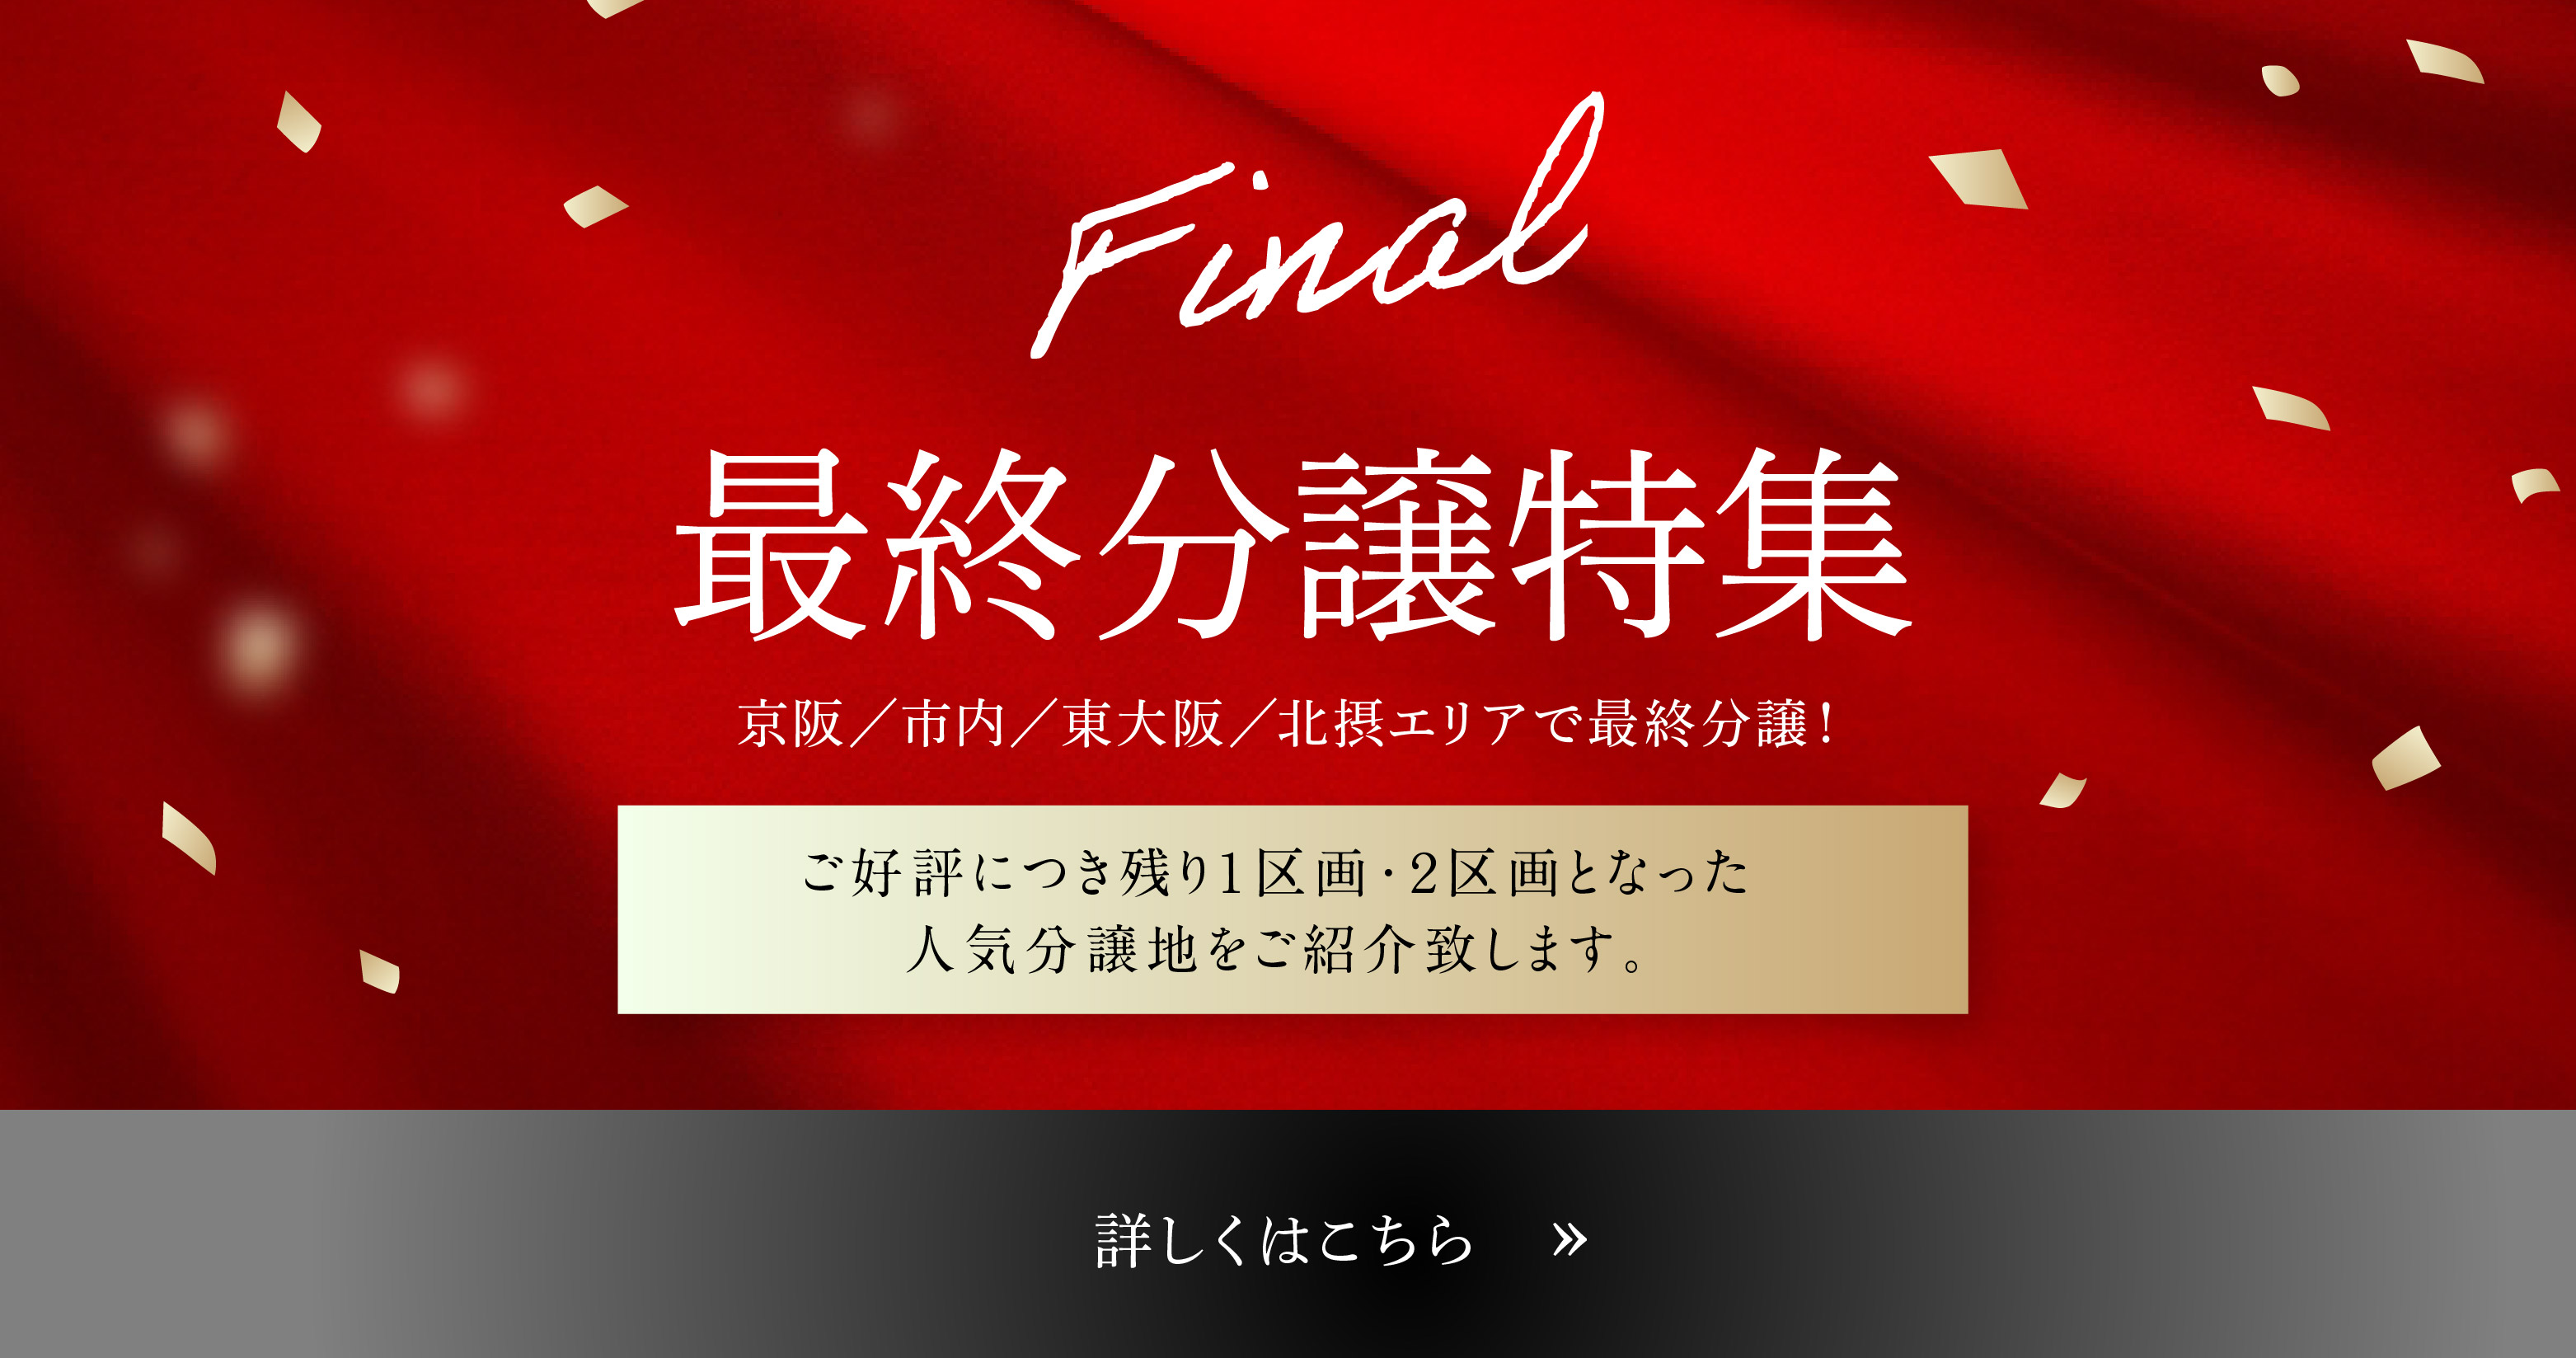 【 Final 】フジ住宅・最終分譲特集